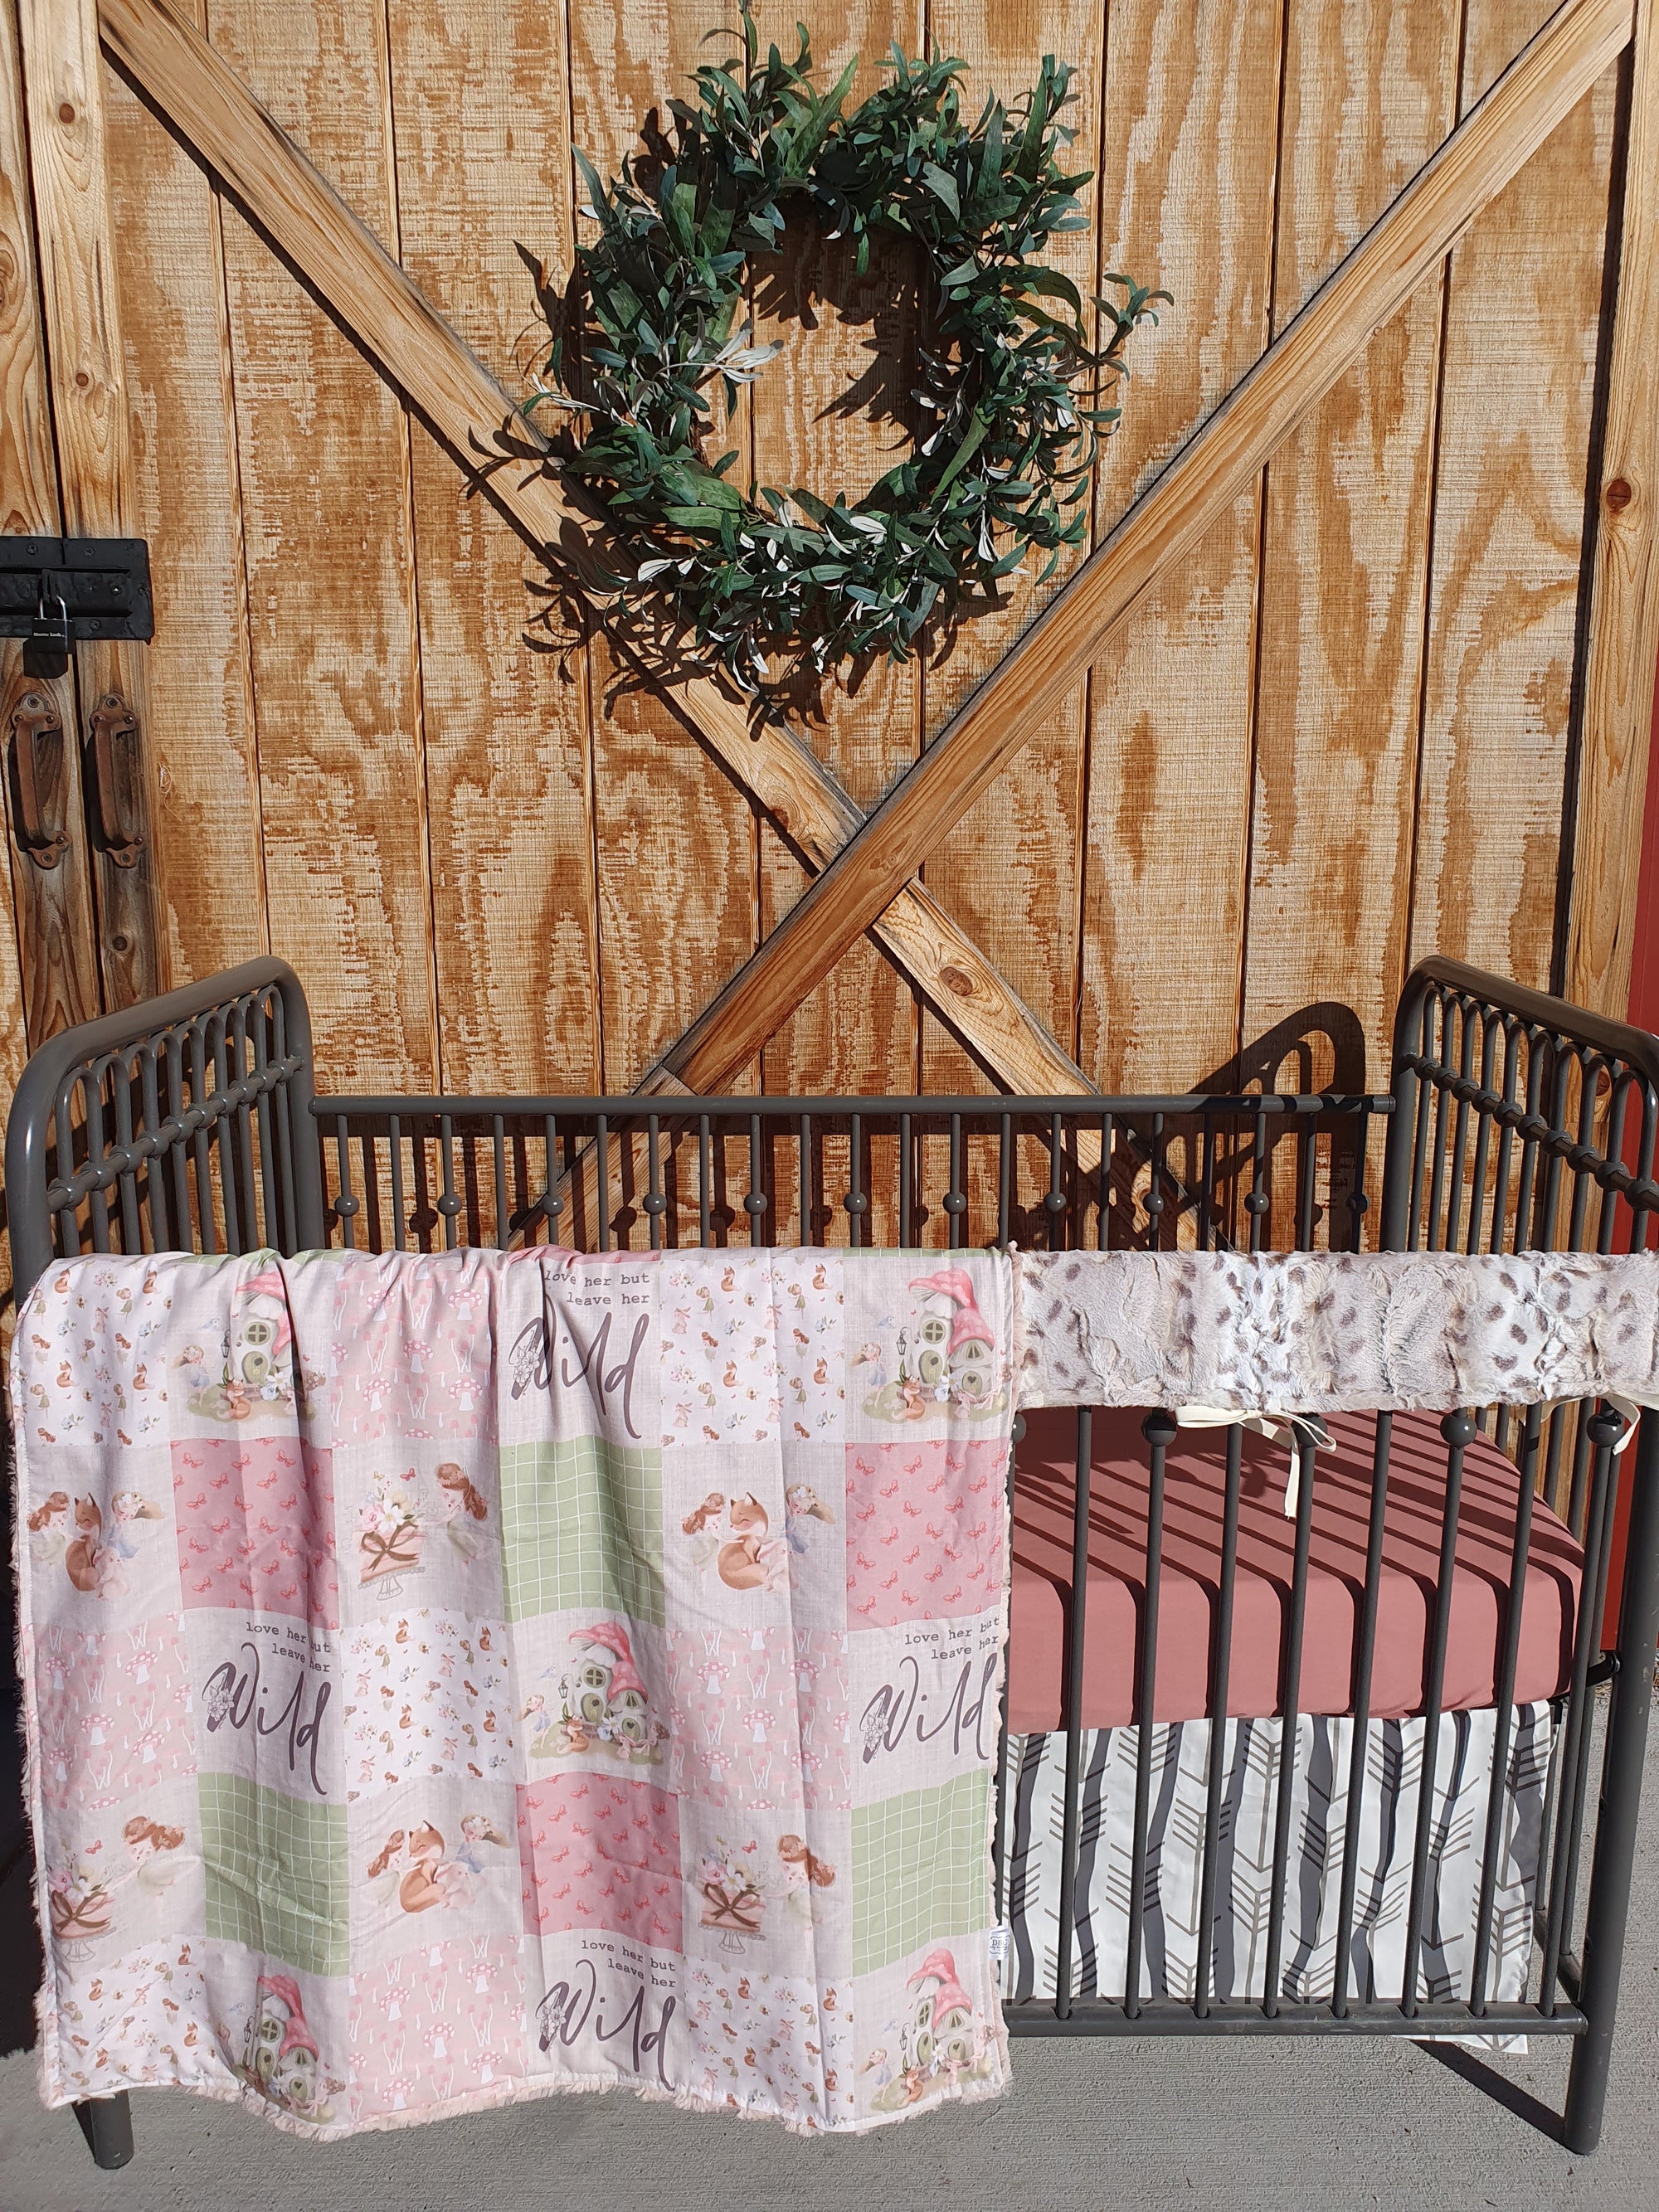 New Release Girl Crib Bedding- Woodland Fairy Garden Baby Bedding Collection - DBC Baby Bedding Co 